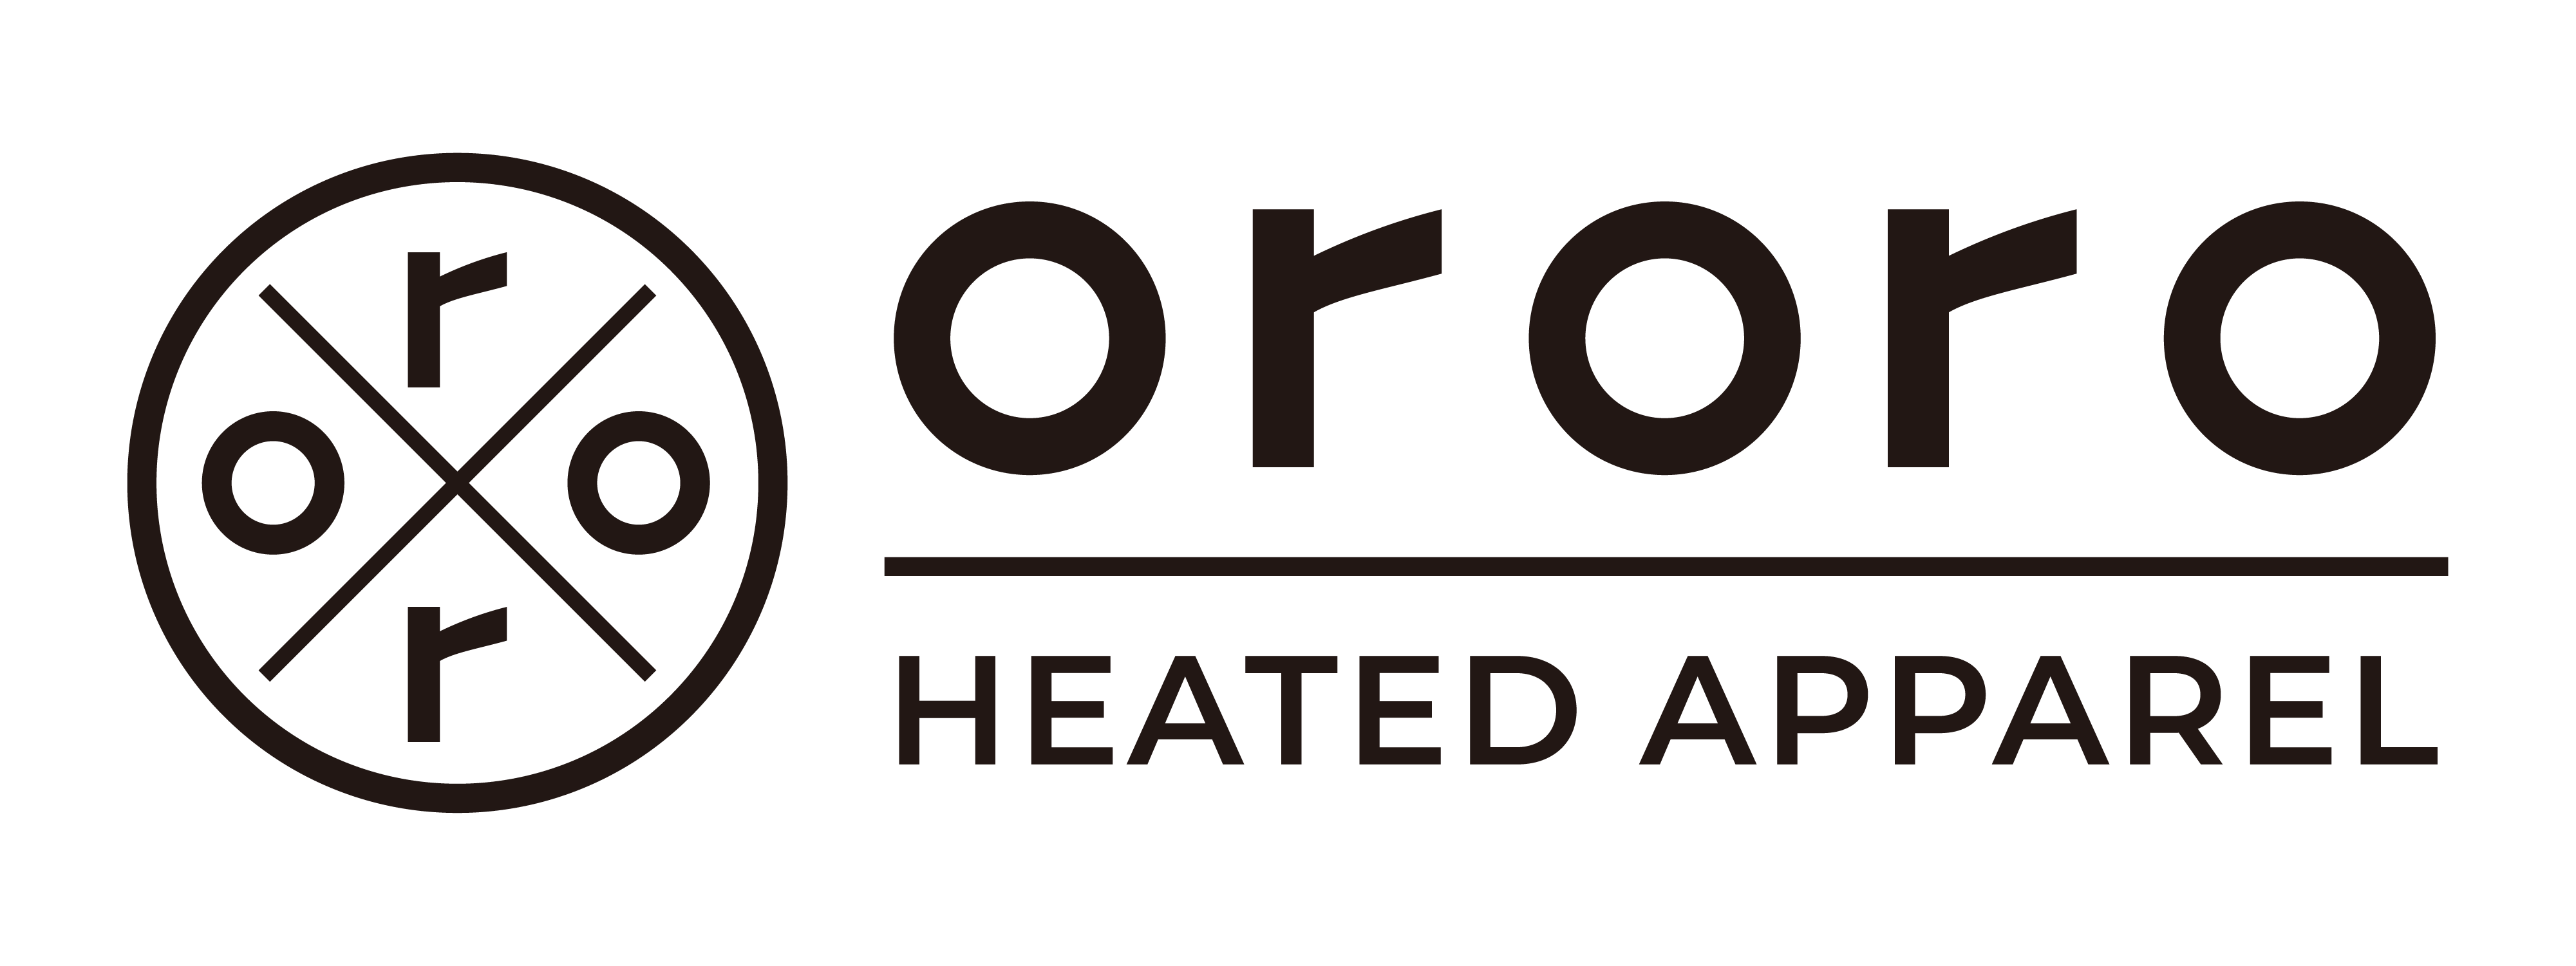 Ororo Heated Apparel